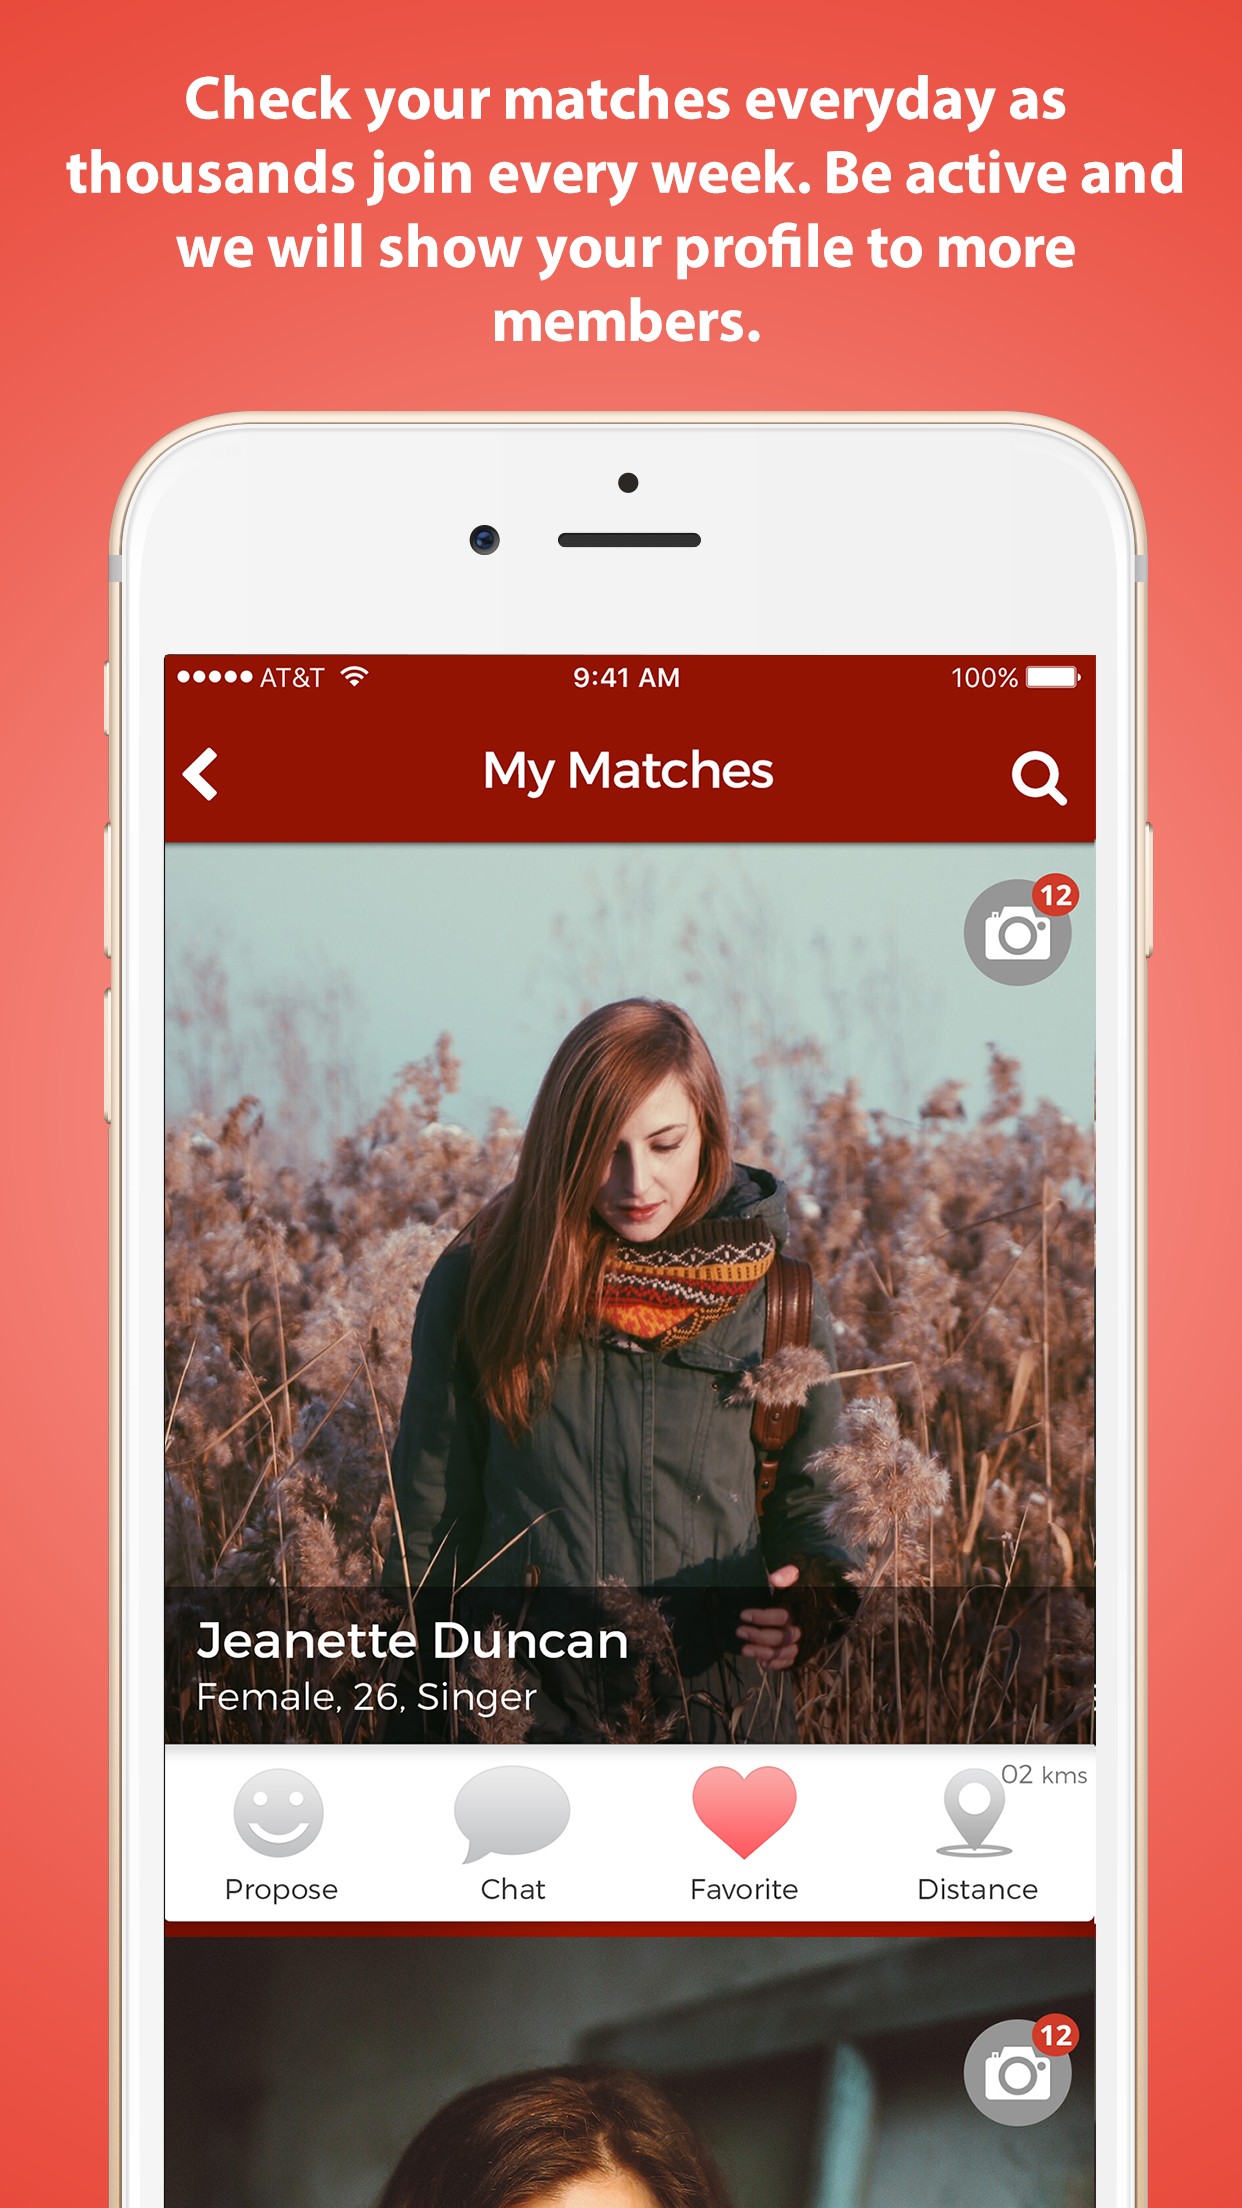 Desi Singles - Desi Singles Matchmaking App